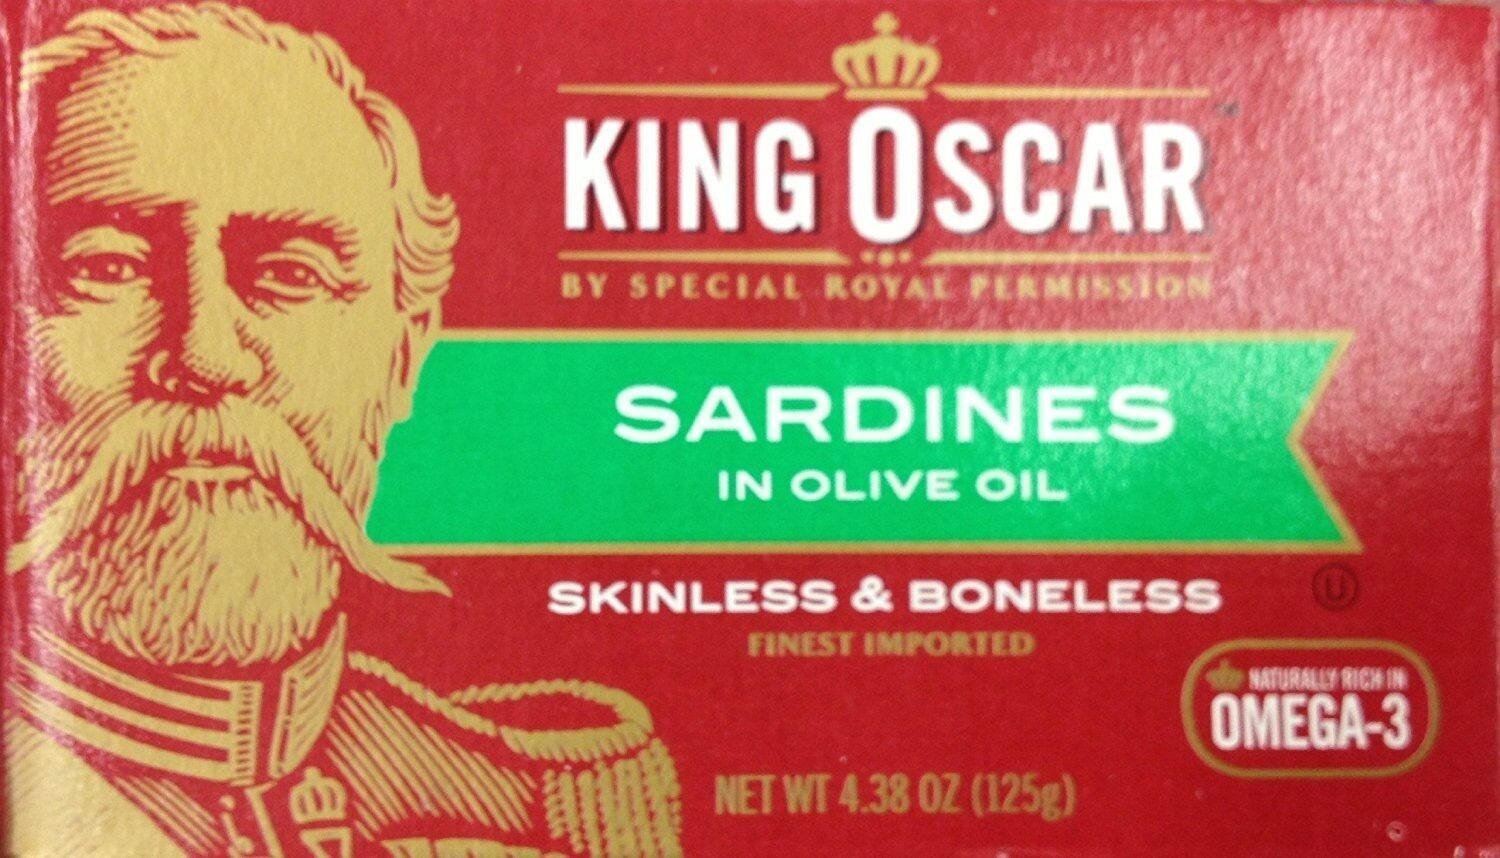 Skinless boneless sardines in olive oil - Product